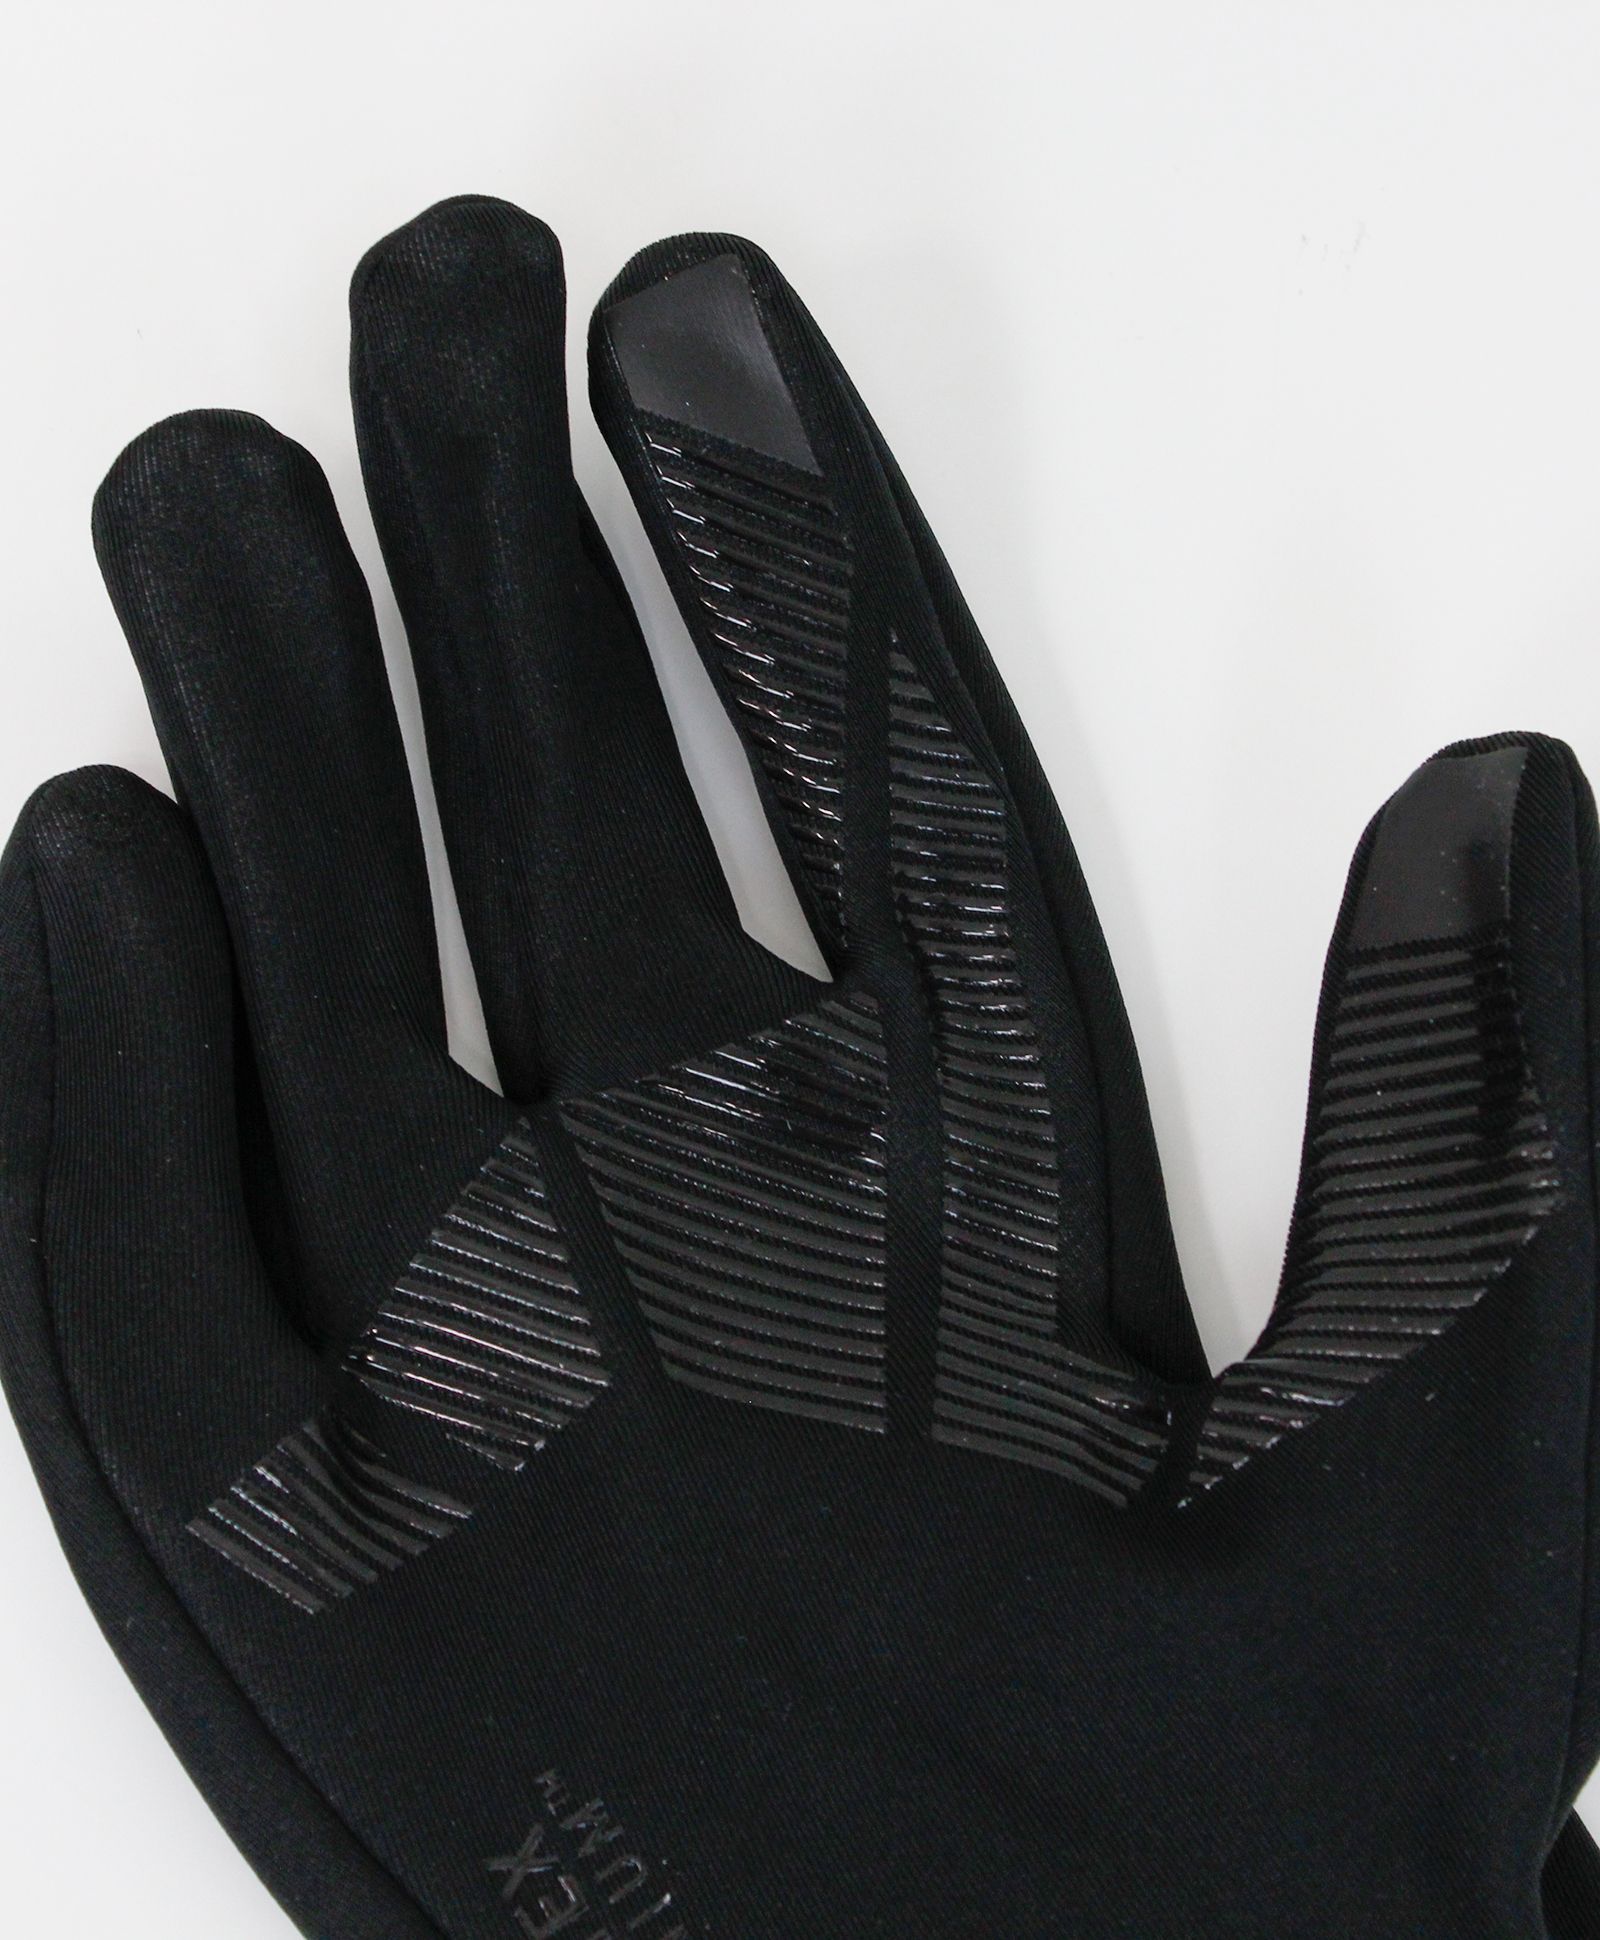 Y-3 - ゴアテックスグローブ 手袋 / Y-3 GORE-TEX GLOVES / BLACK